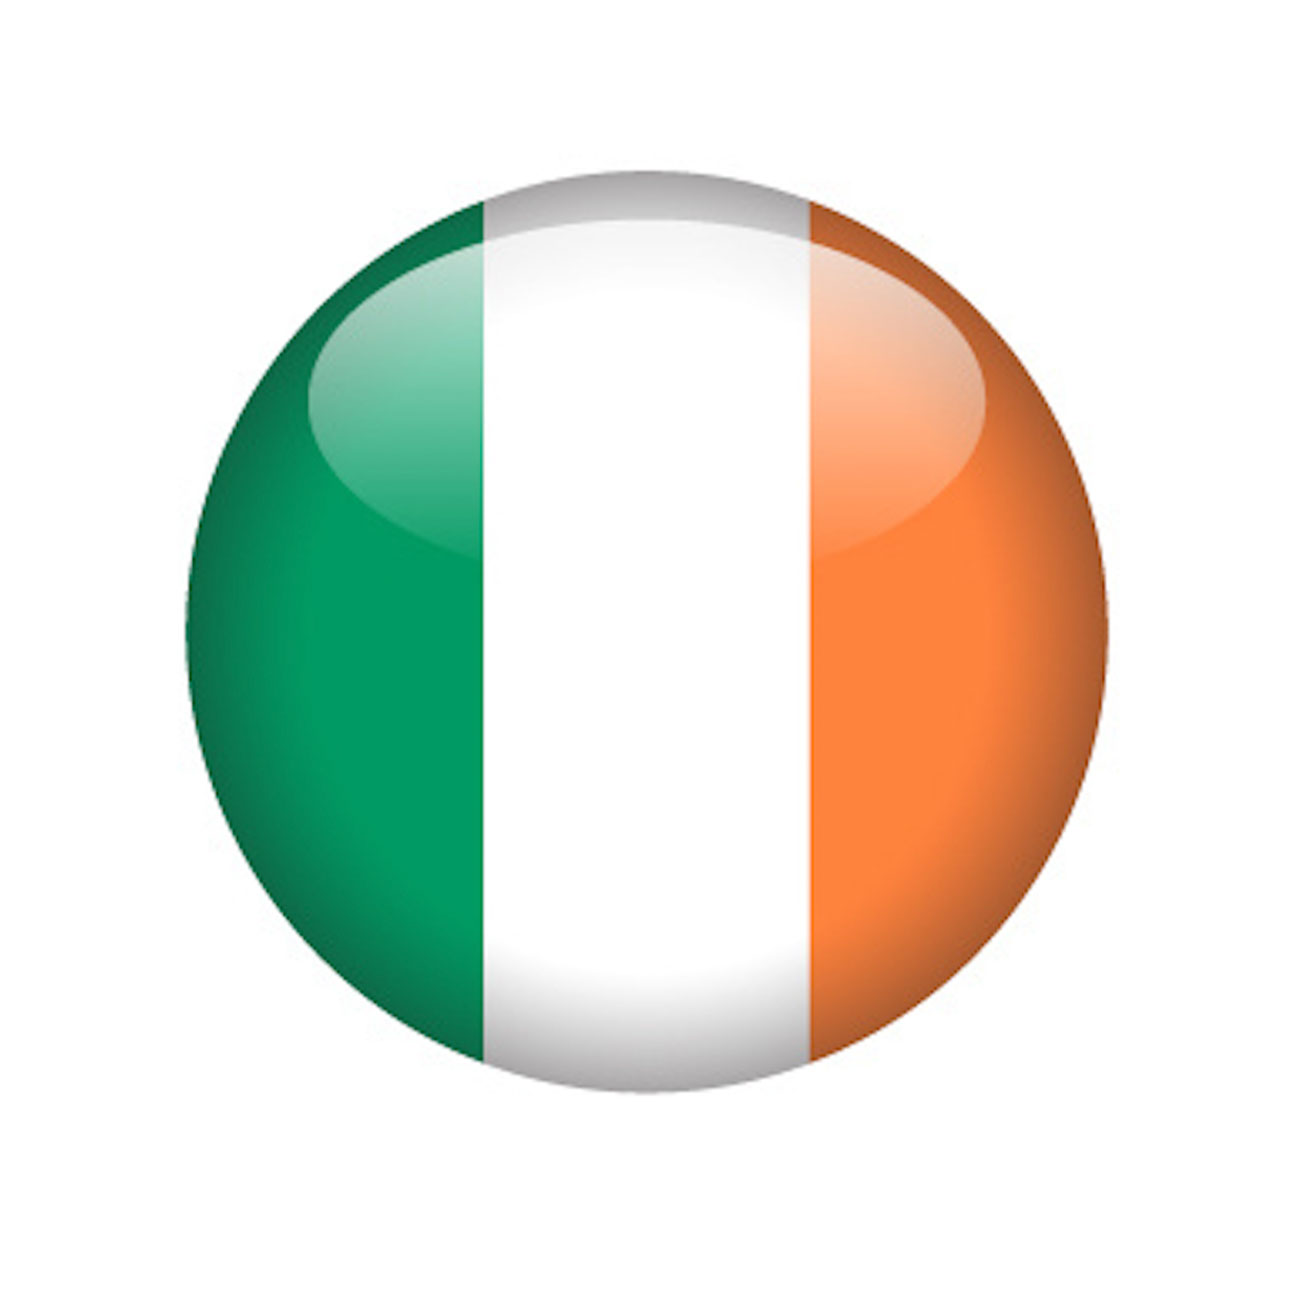 ireland country flag round icon